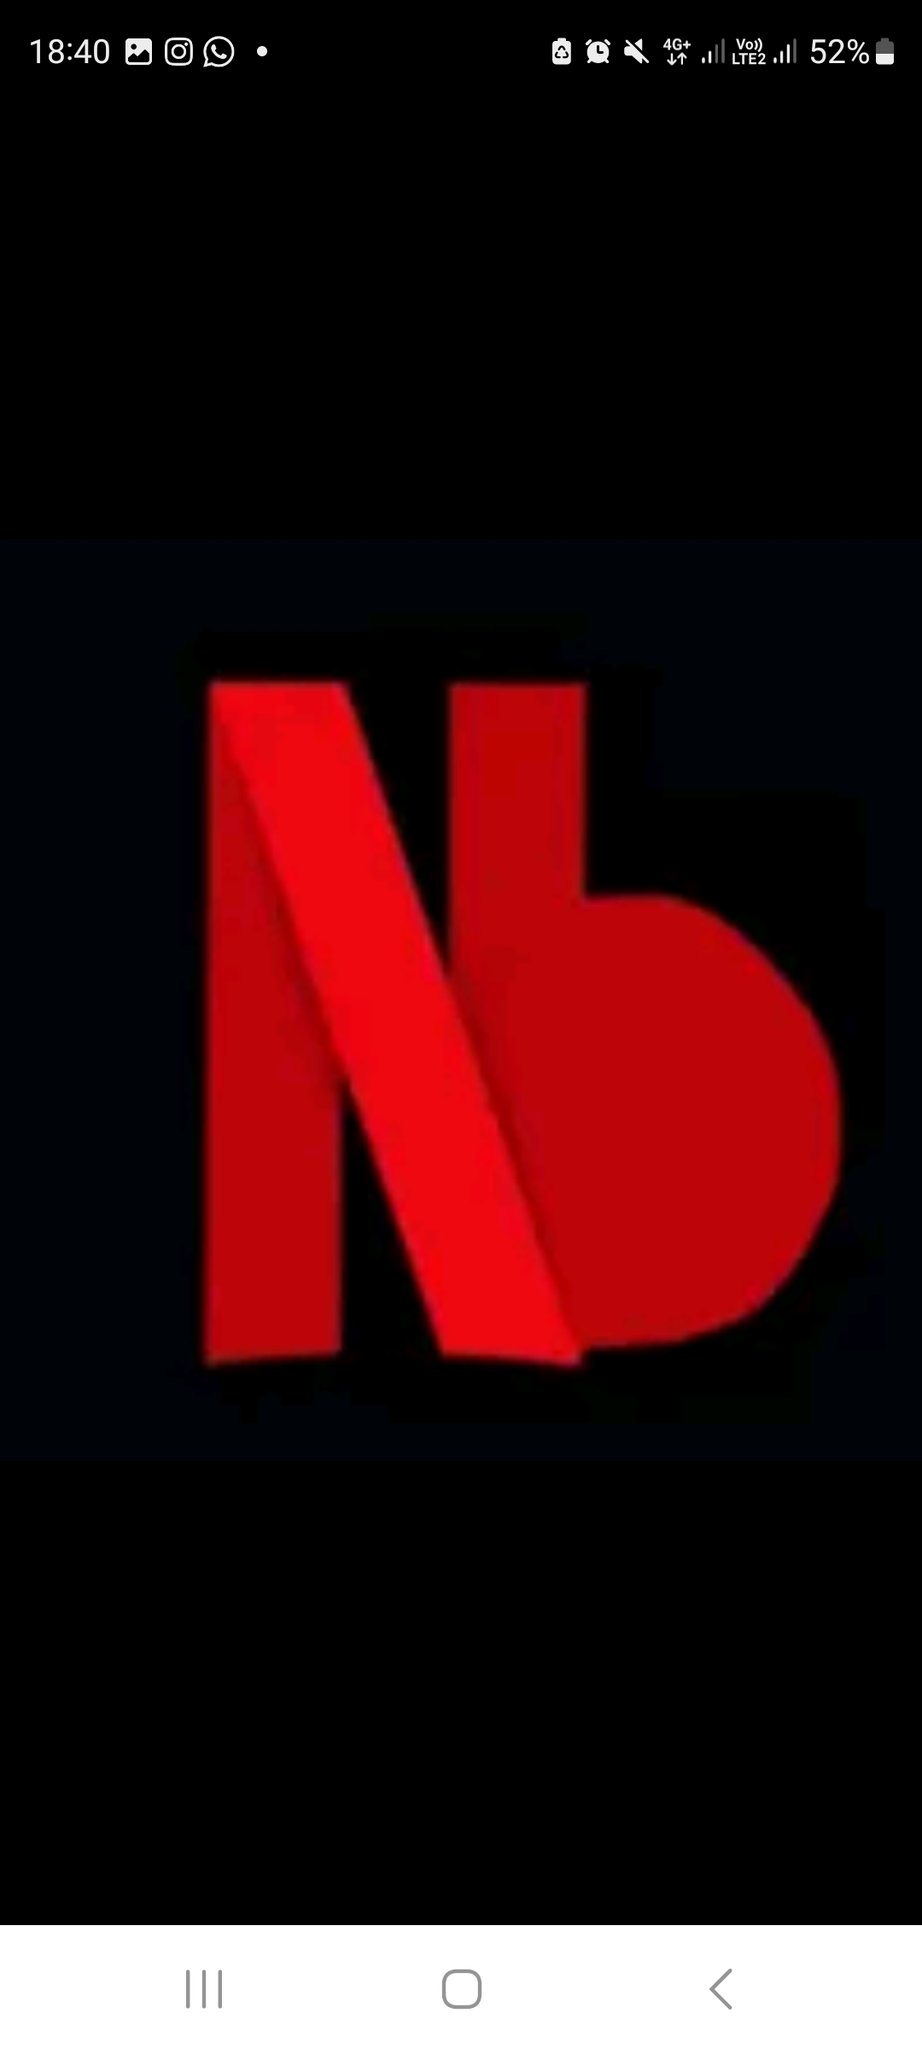 Portal Netflix BR  Fan Account on X: Os episódios 326-381 do